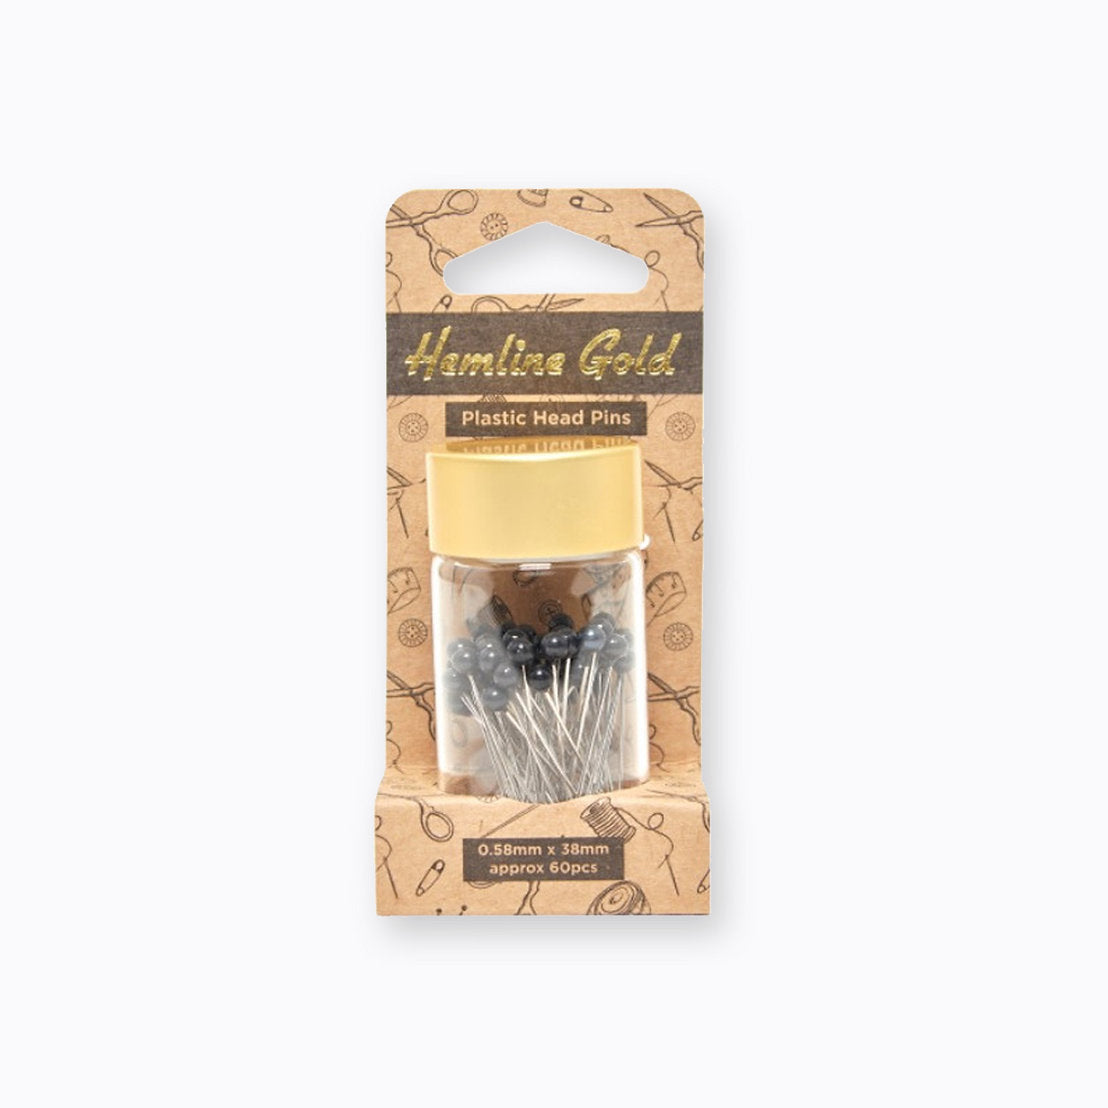 Plastic Head Pins Black Hemline Gold 678.BK.HG